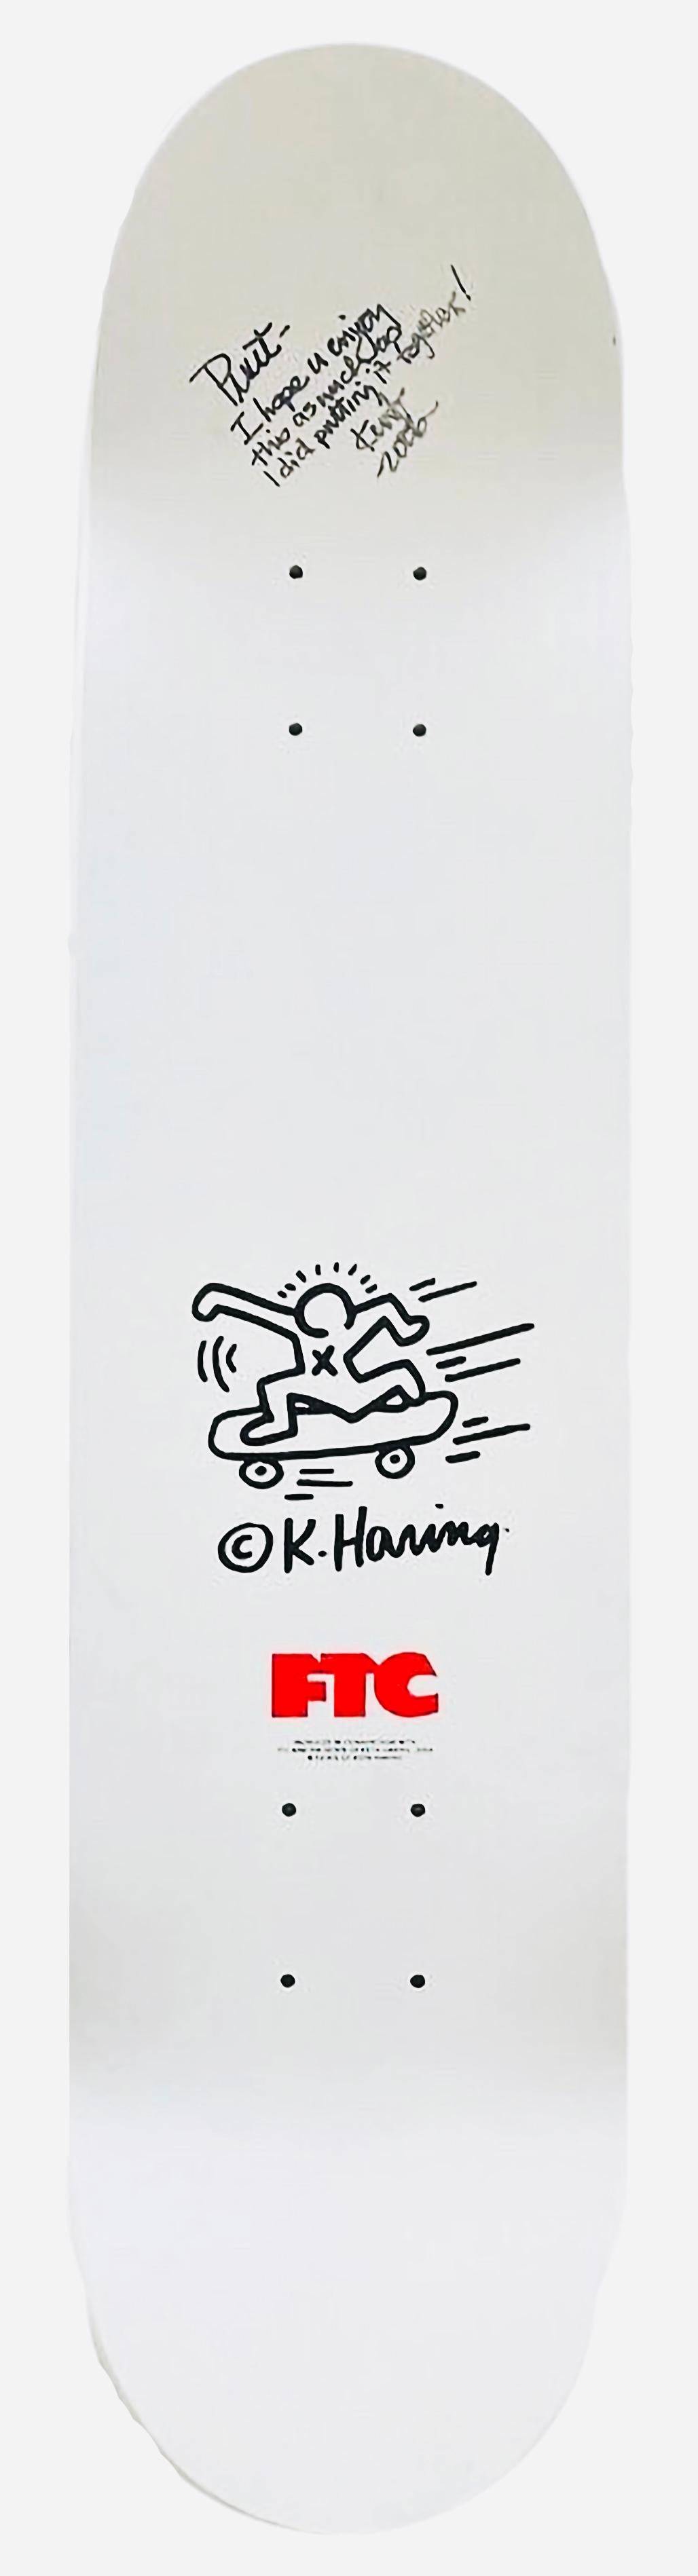 Vintage Keith Haring Skateboard Deck (Keith Haring skate deck) - Pop Art Print by (after) Keith Haring